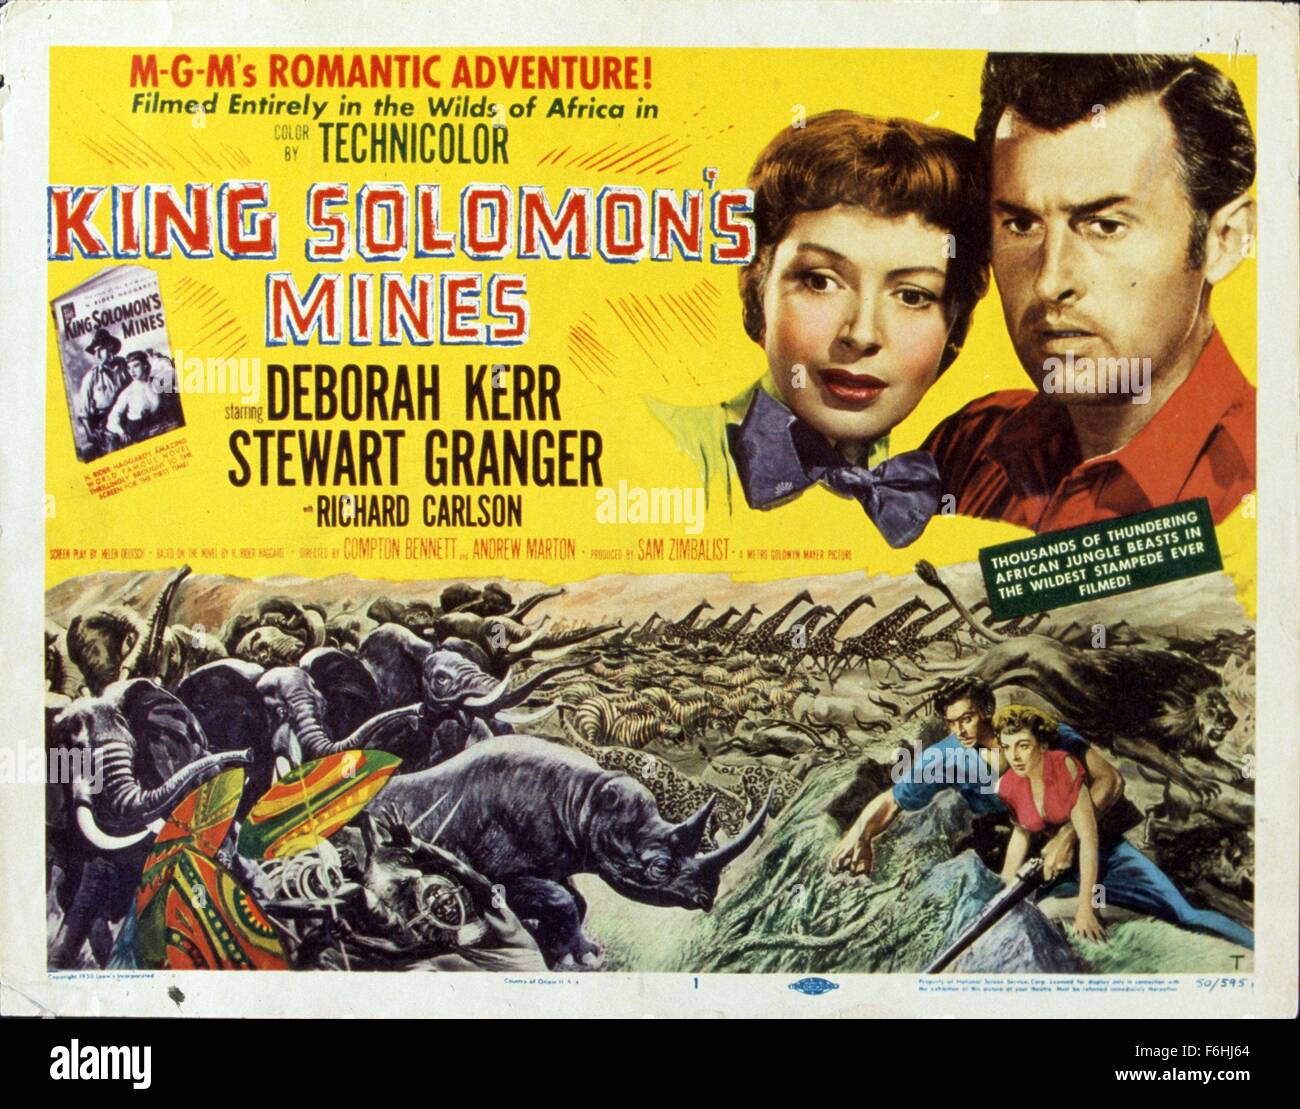 1950, Film Title: KING SOLOMON'S MINES, Director: COMPTON, ANDREW MARTON BENNETT, Studio: MGM, Pictured: COMPTON, ANDREW MARTON BENNETT, STEWART GRANGER, DEBORAH KERR. (Credit Image: SNAP) Stock Photo